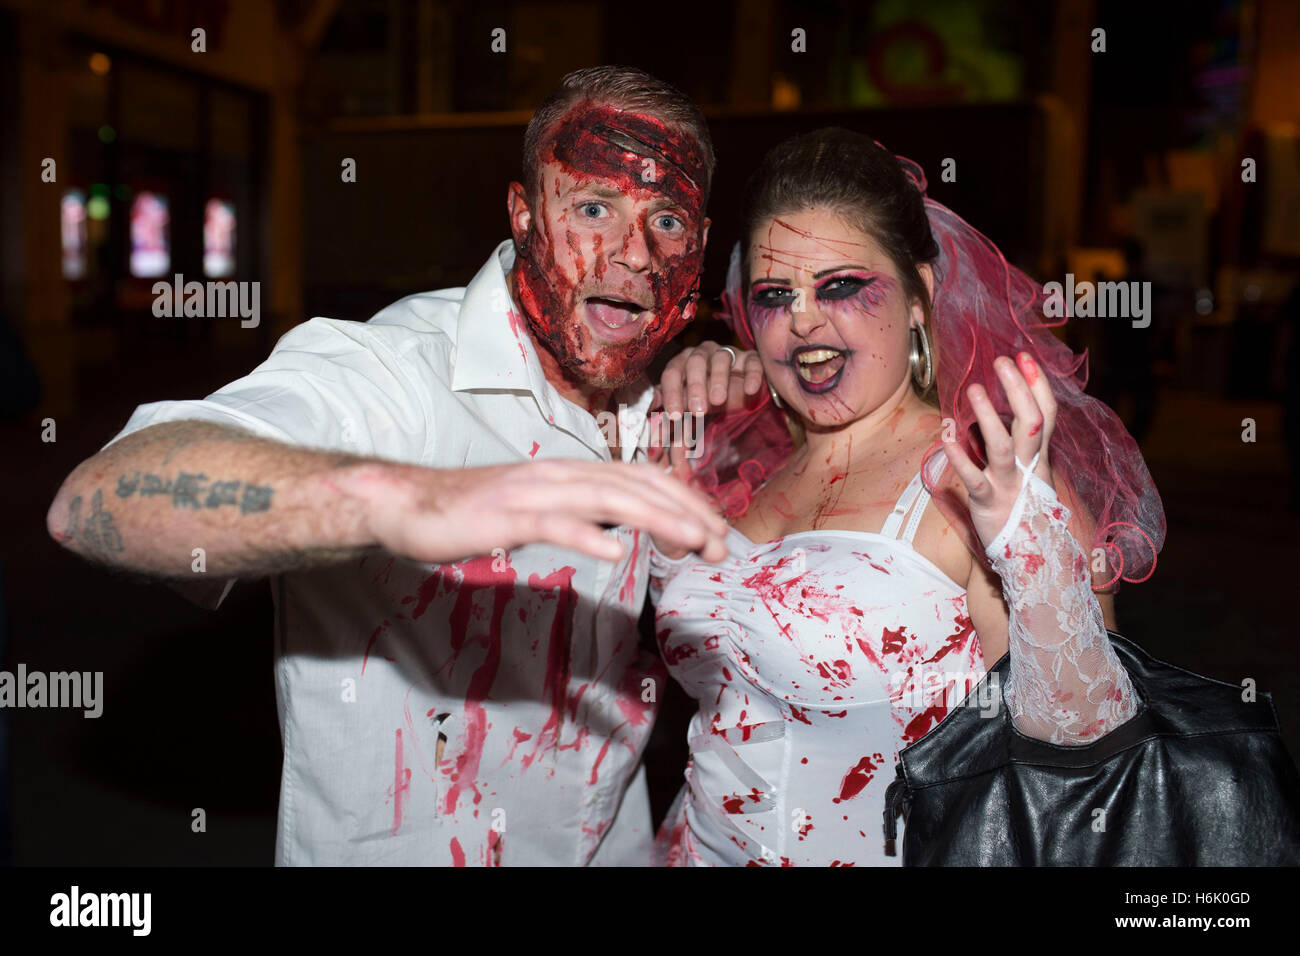 Fake Blood Halloween Stock Photos & Fake Blood Halloween Stock ...